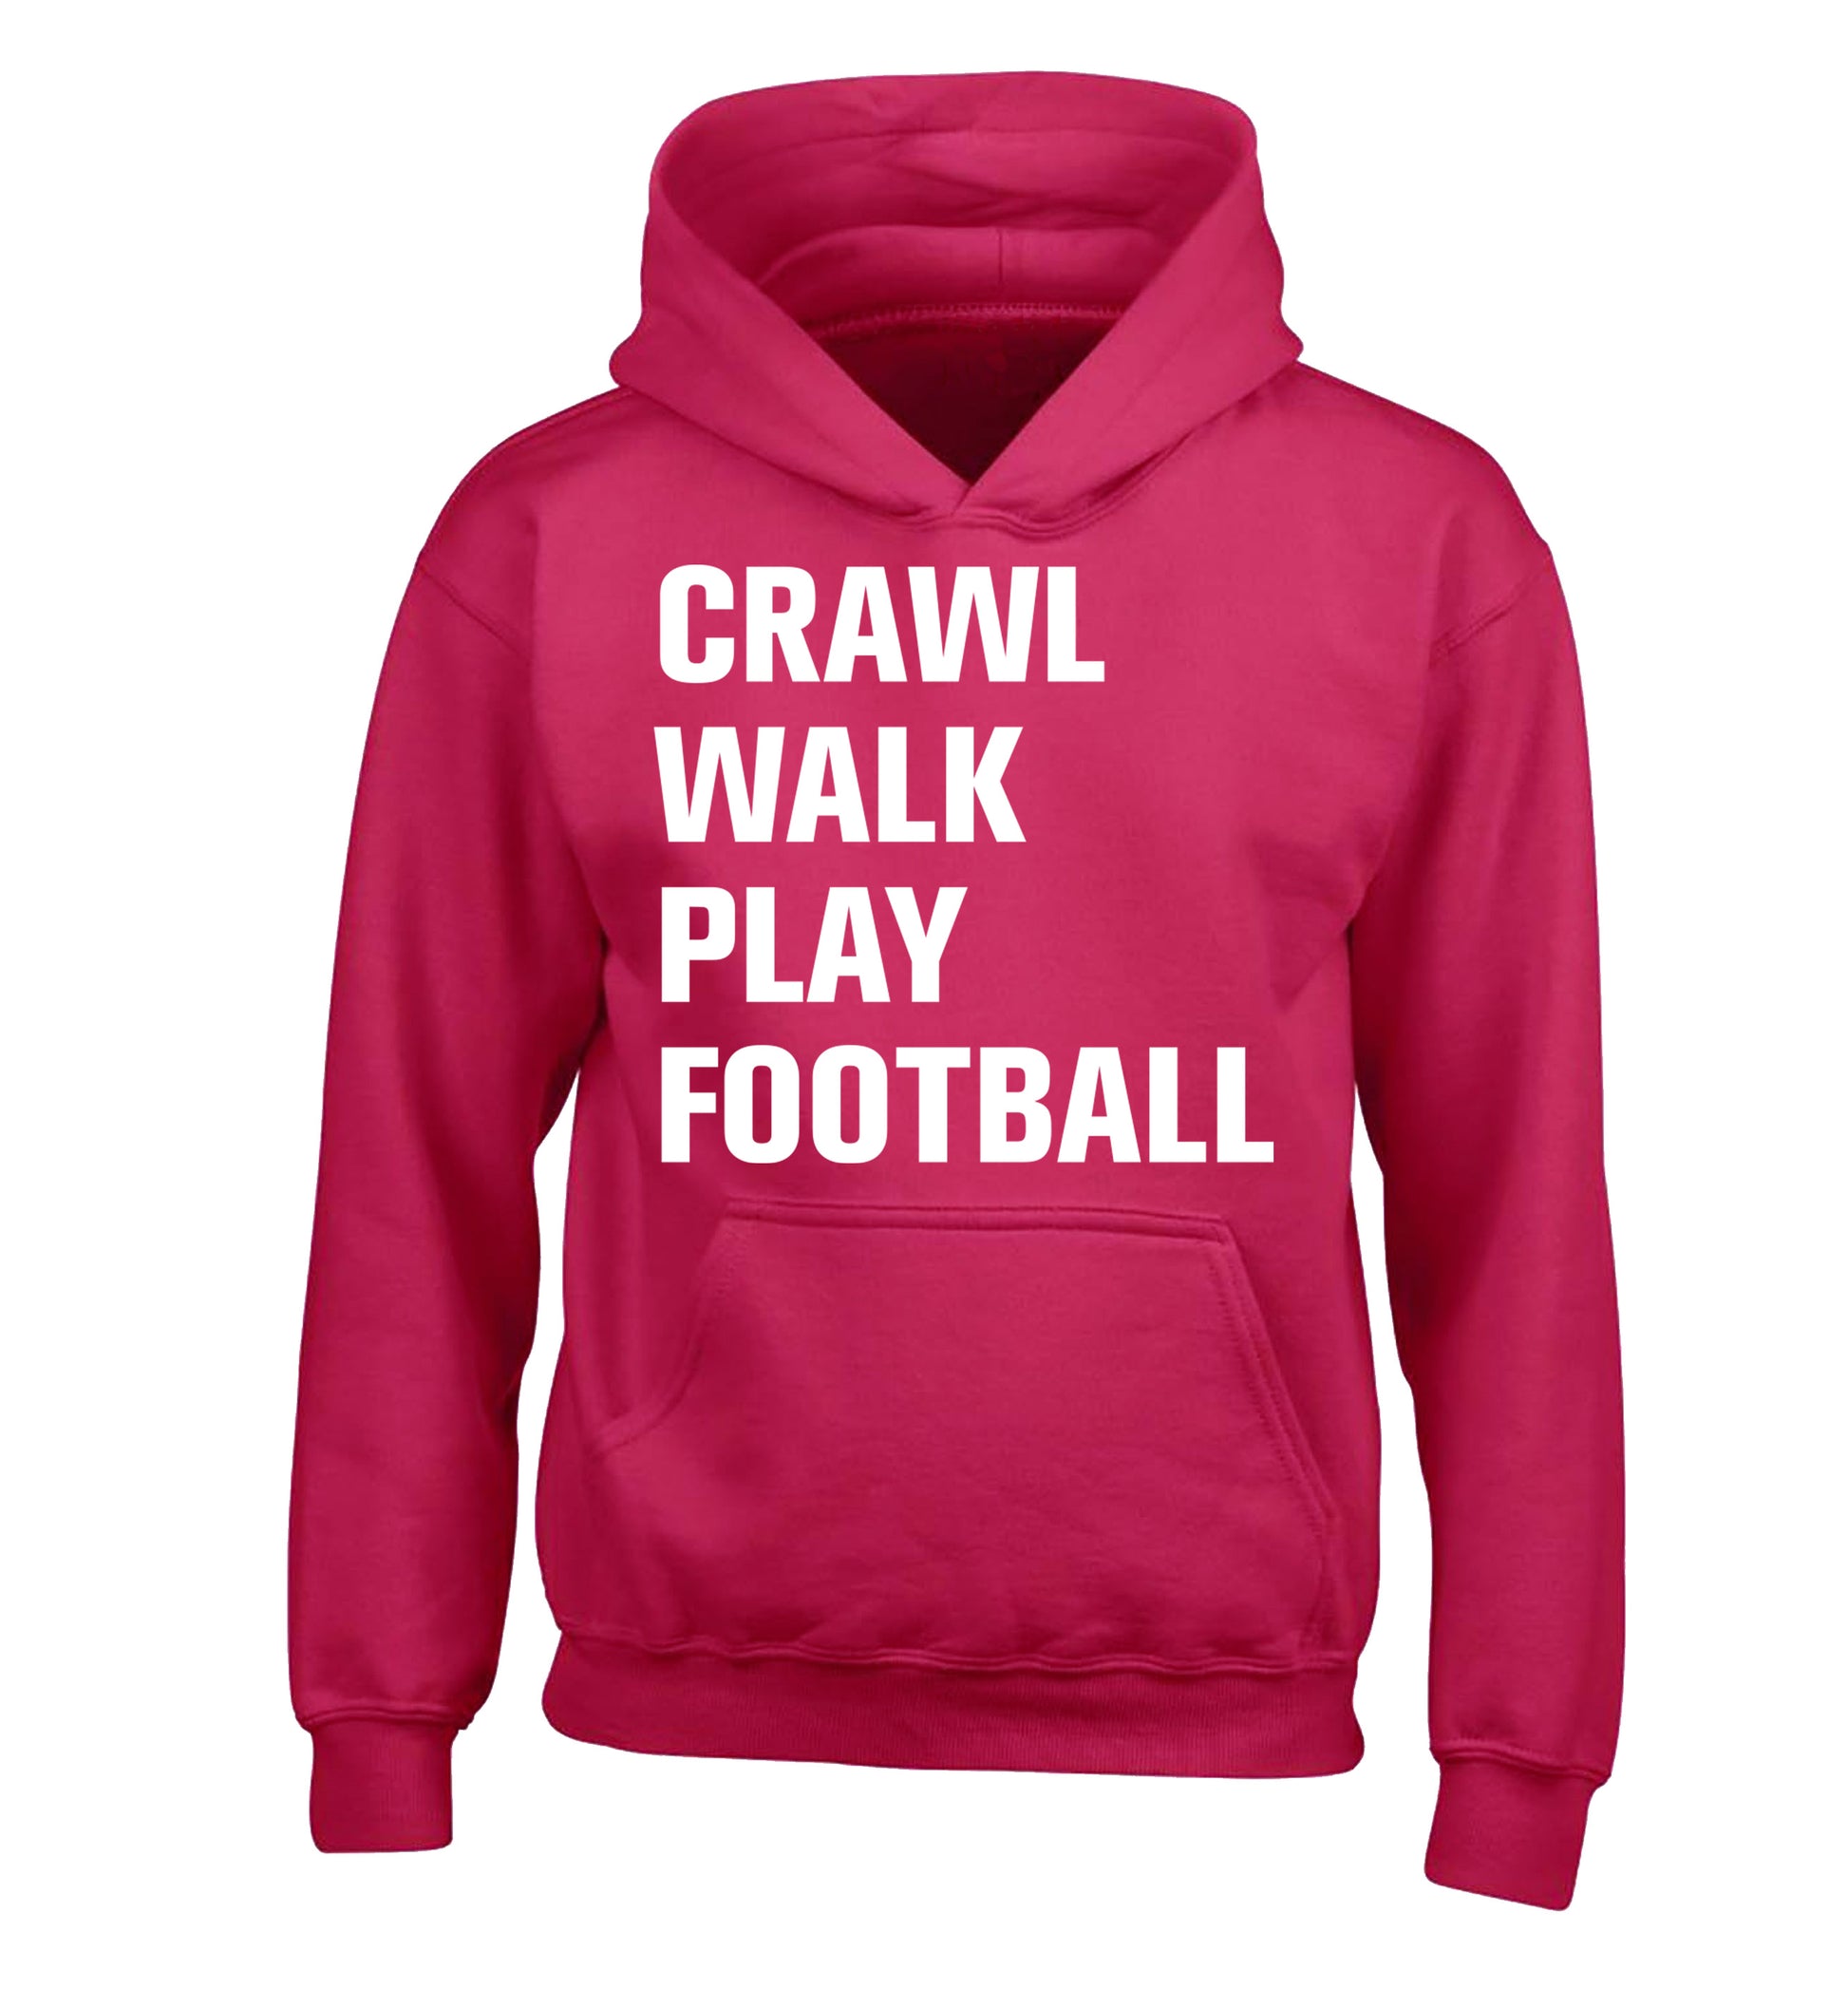 Crawl, walk, play football children's pink hoodie 12-13 Years